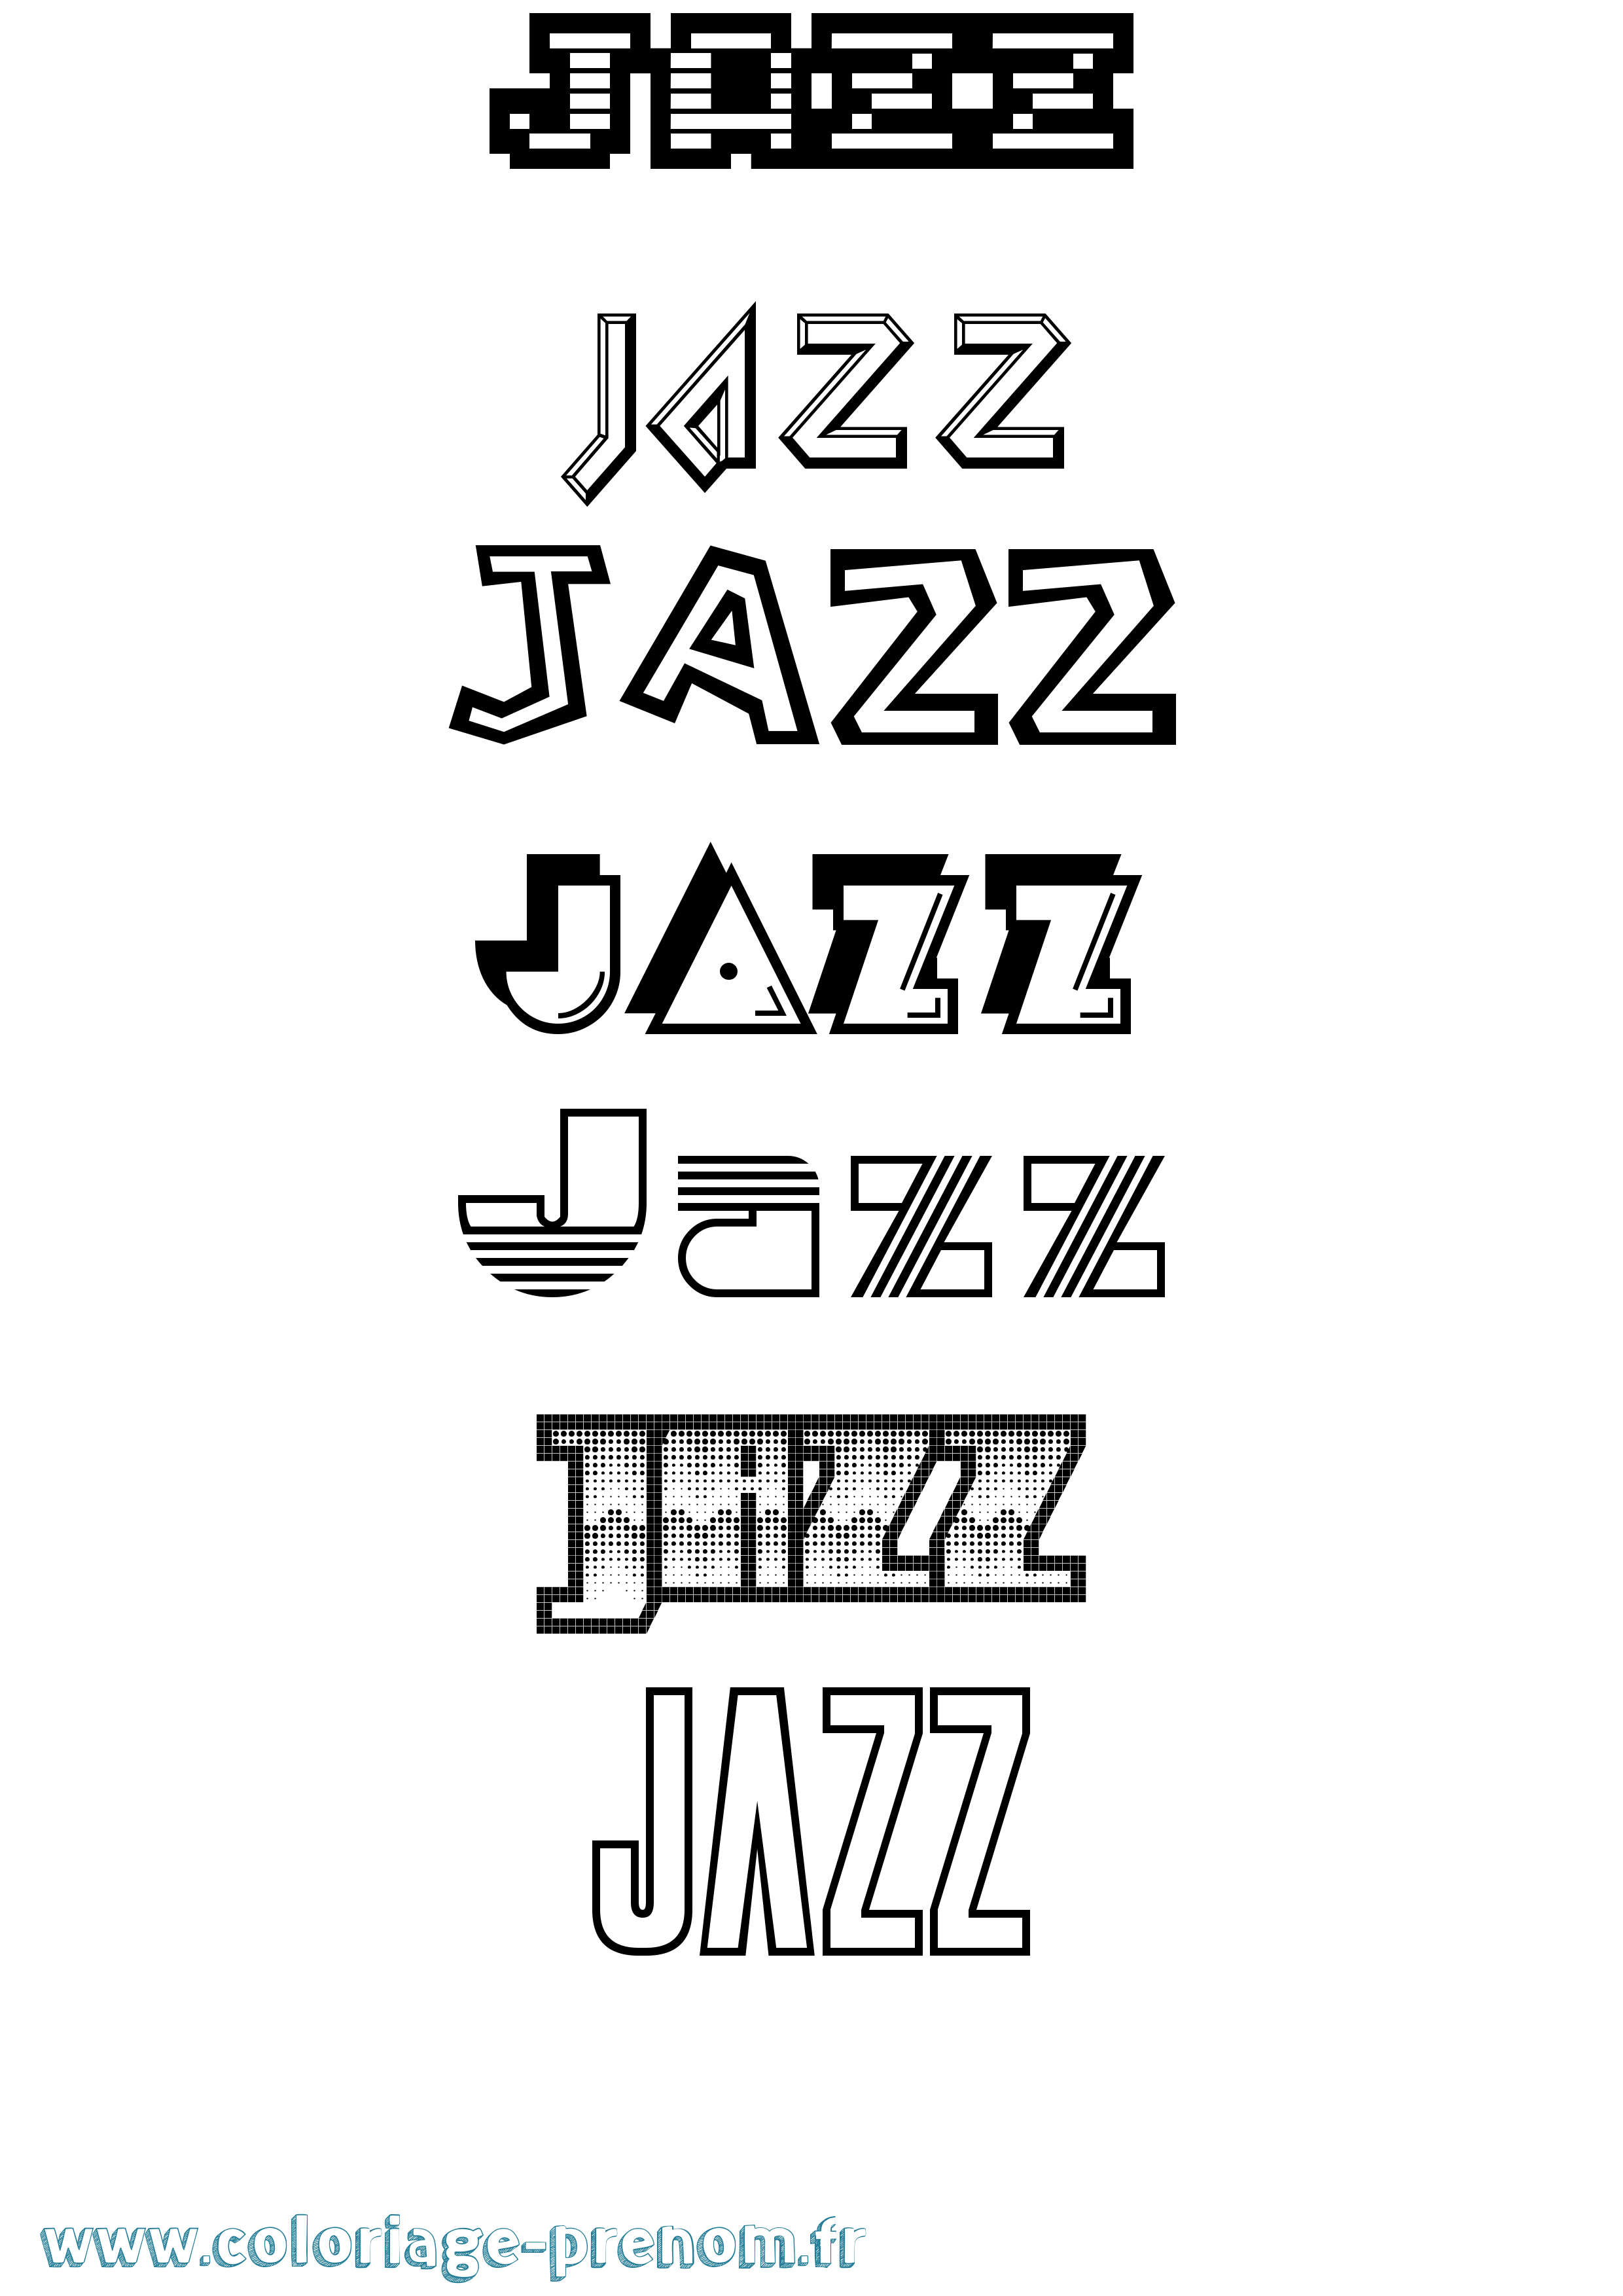 Coloriage prénom Jazz Jeux Vidéos